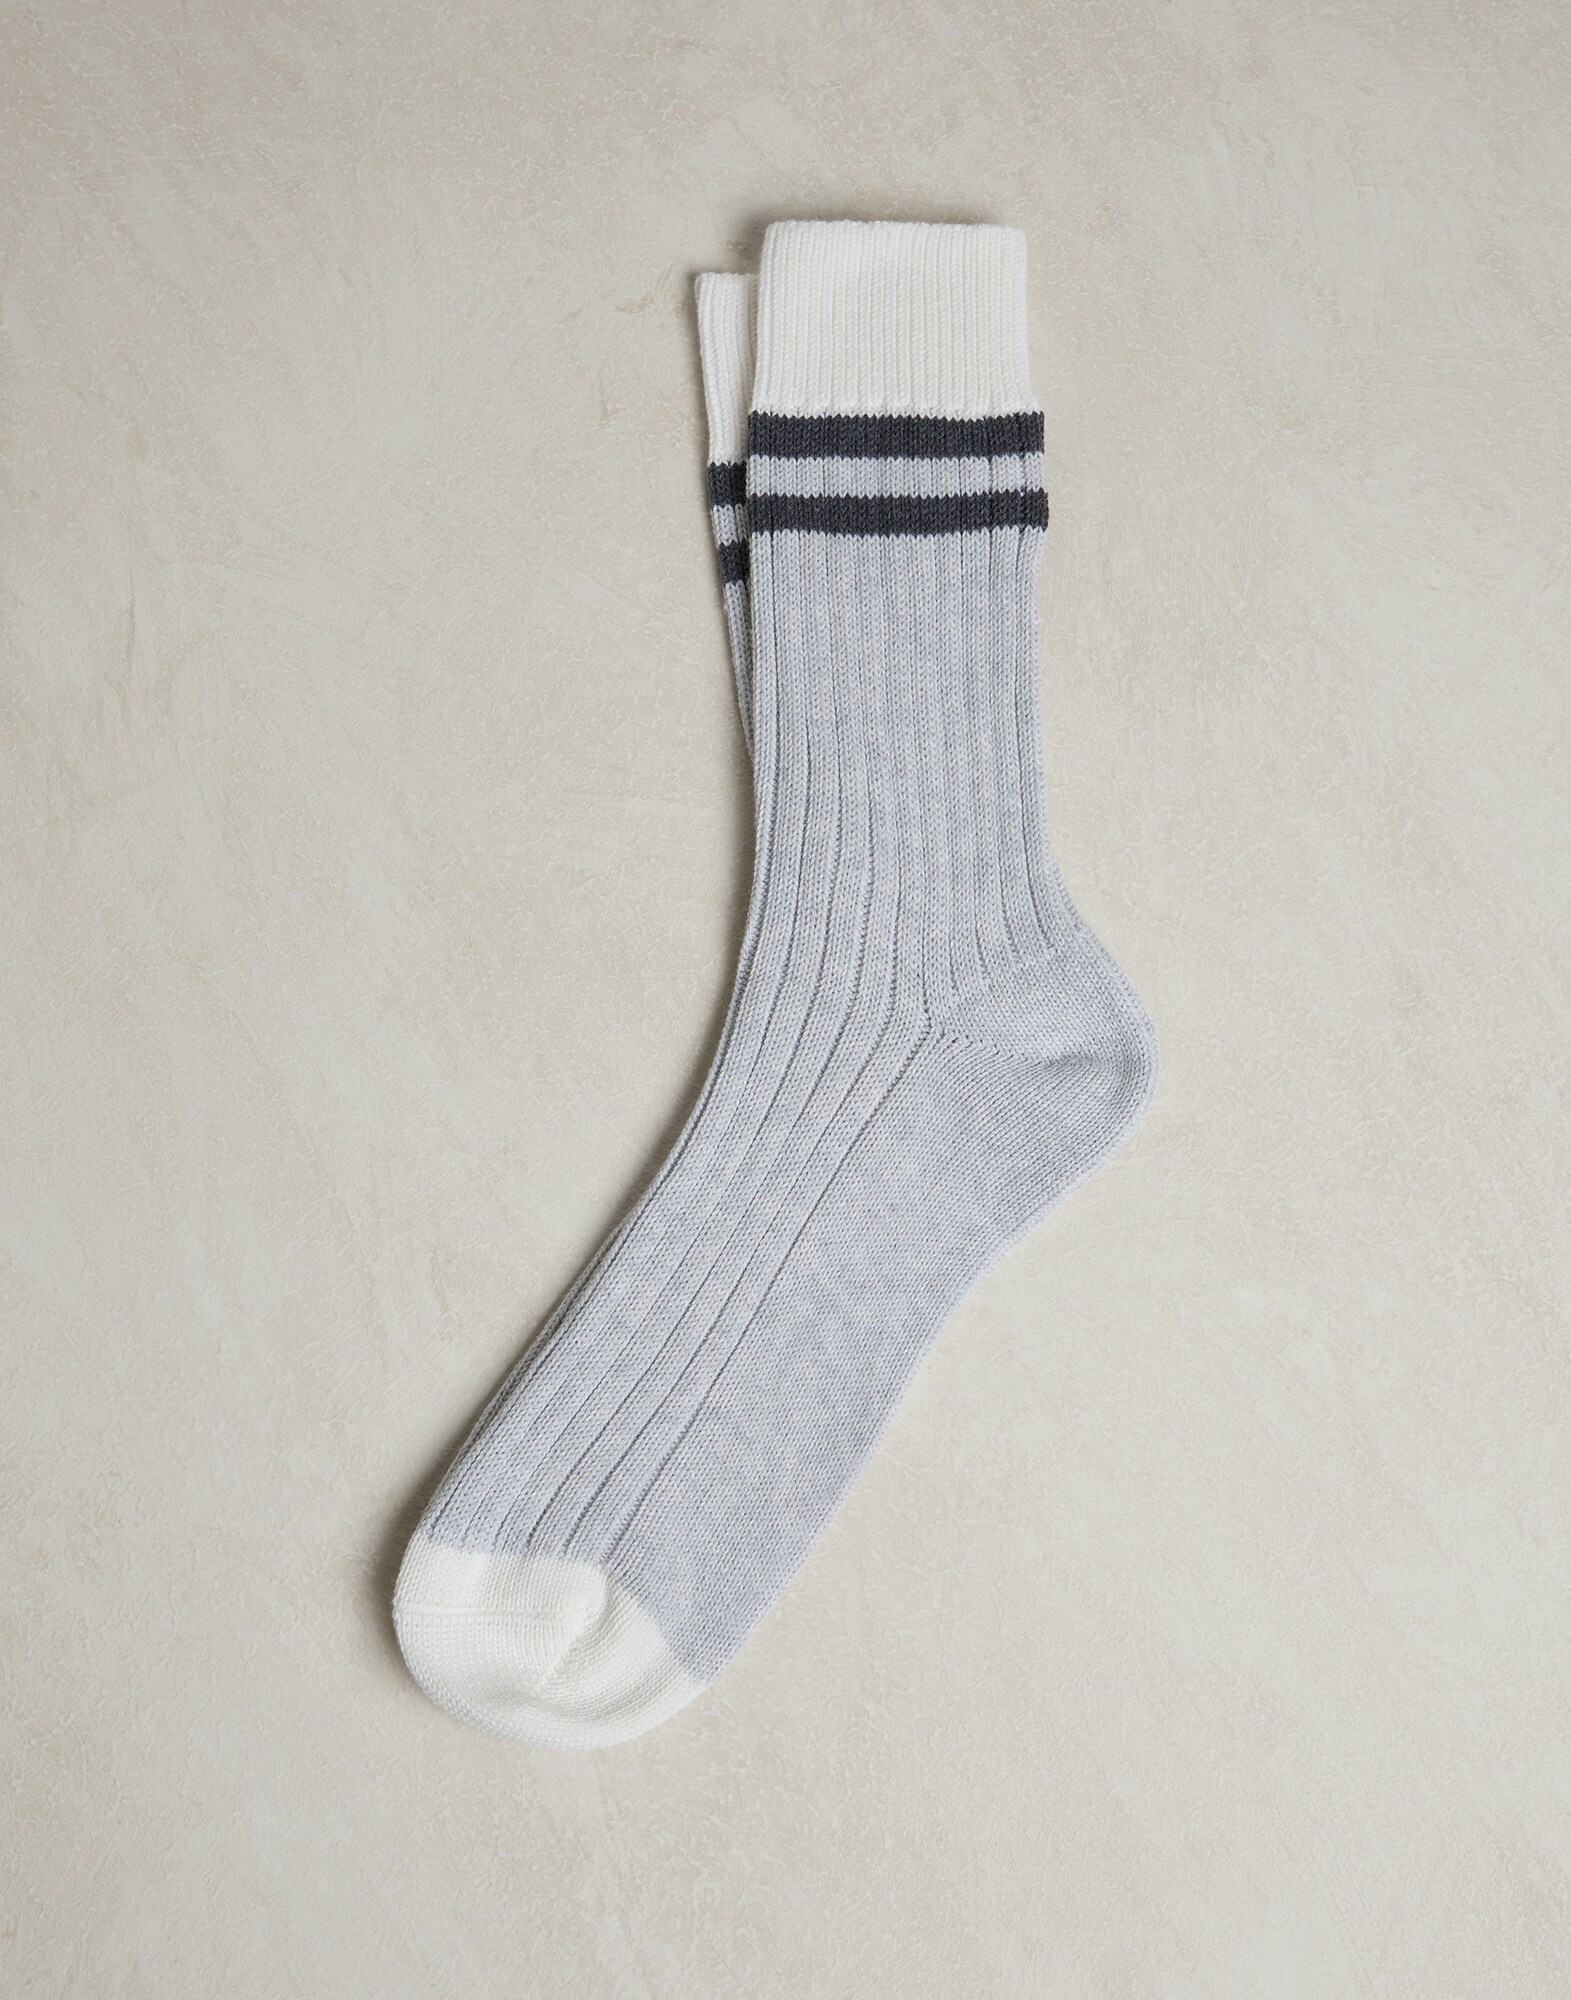 Socks with stripes